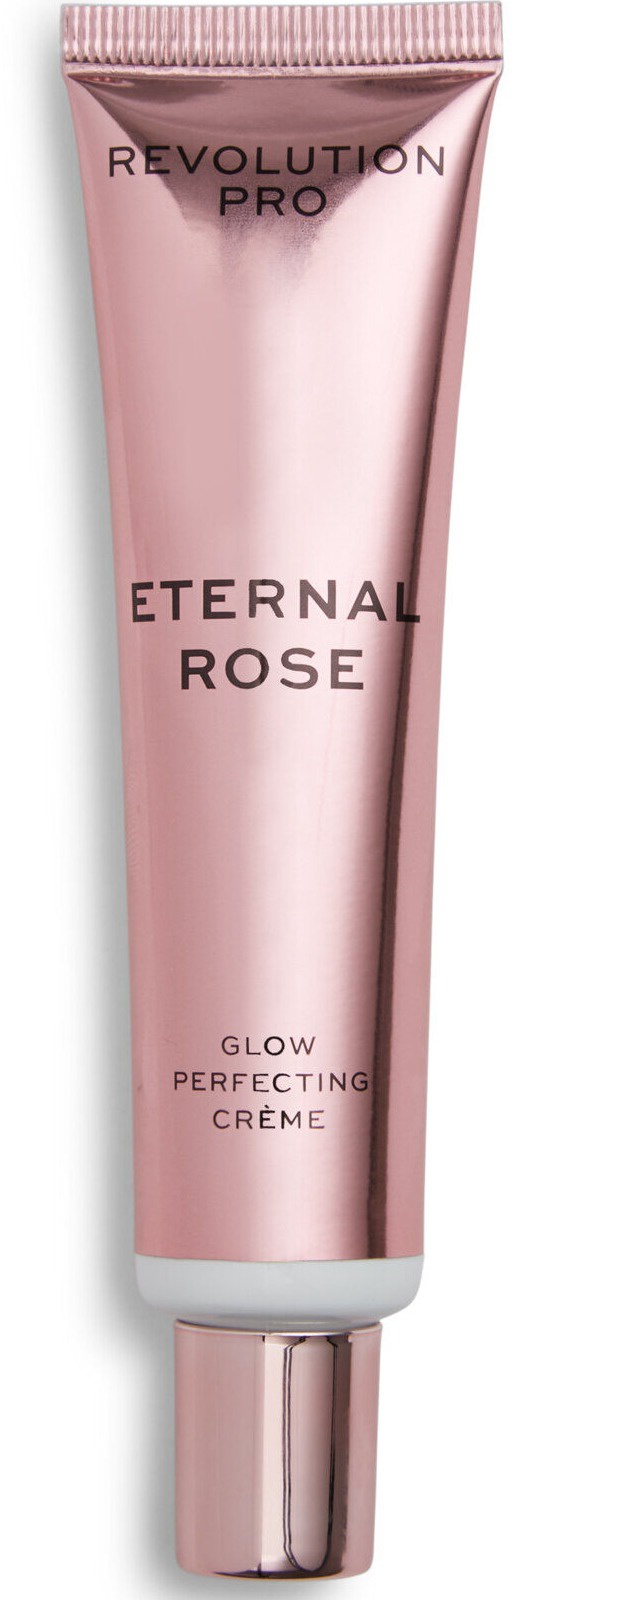 Revolution Pro Eternal Rose Glow Perfecting Crème